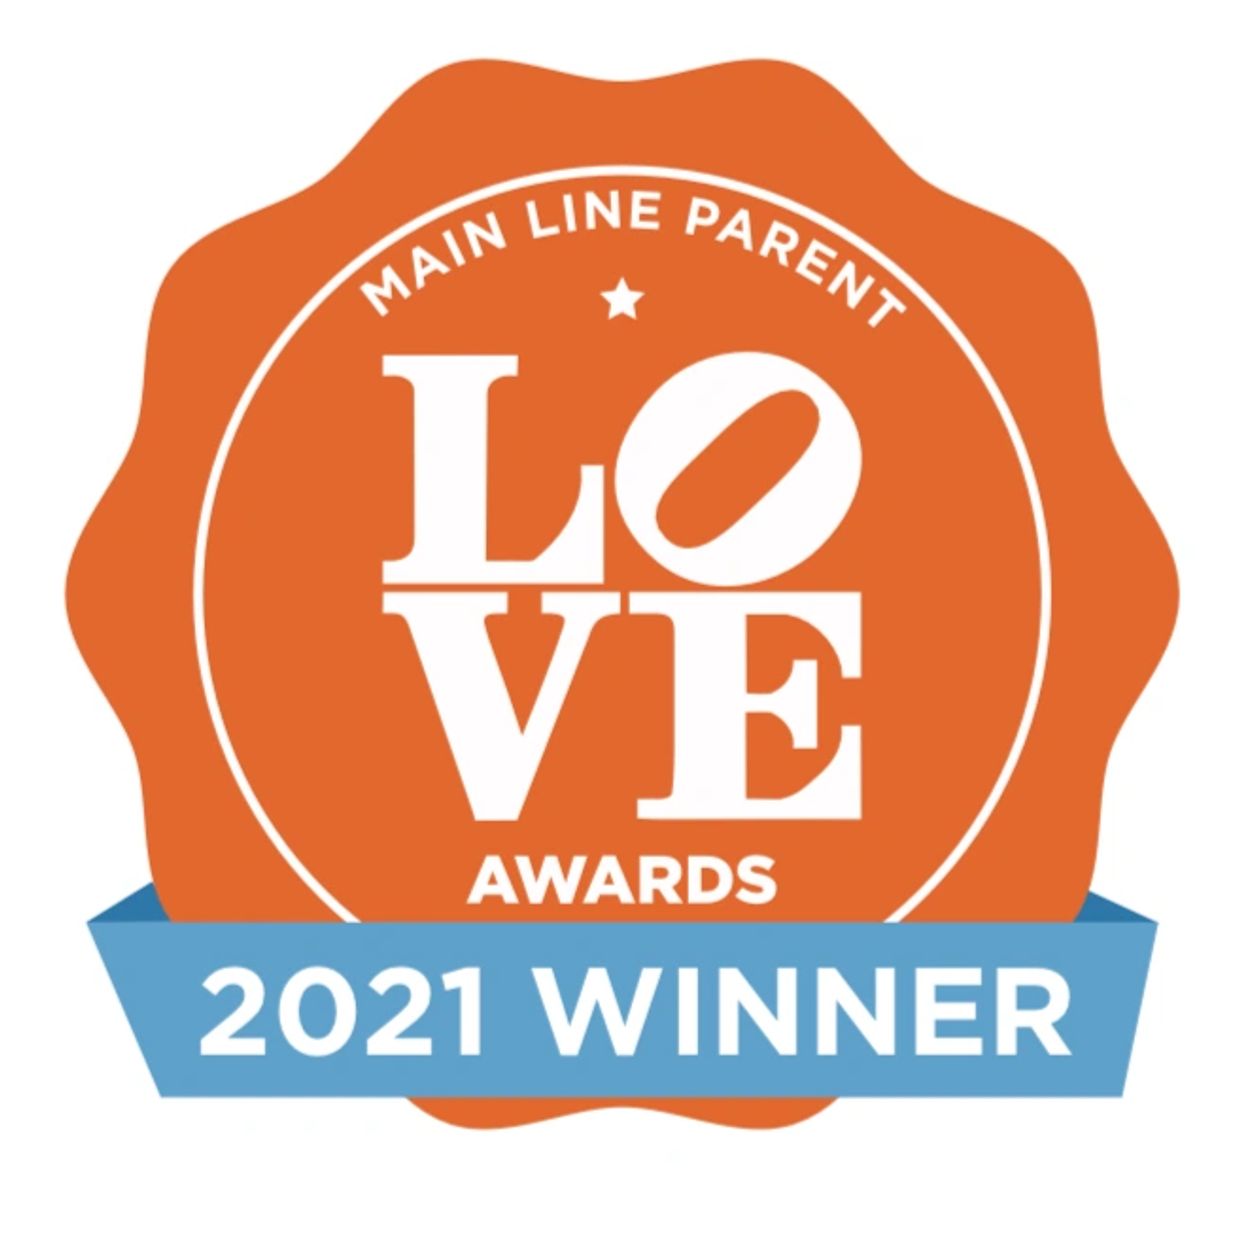 LOVE award from main line parent